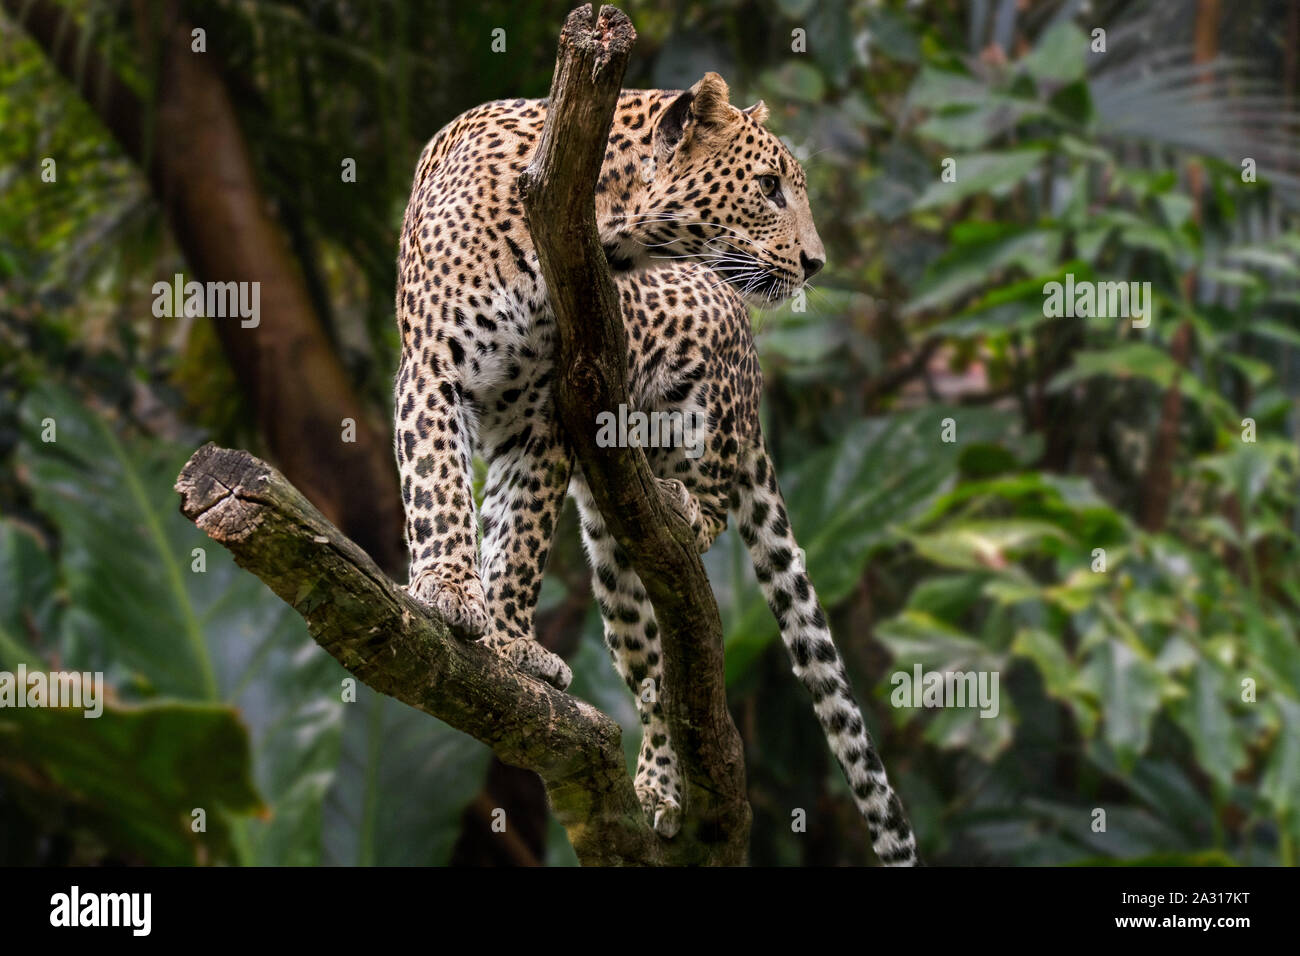 Sri Lanka Leopard (Panthera pardus kotiya) im Baum, beheimatet in Sri Lanka Stockfoto